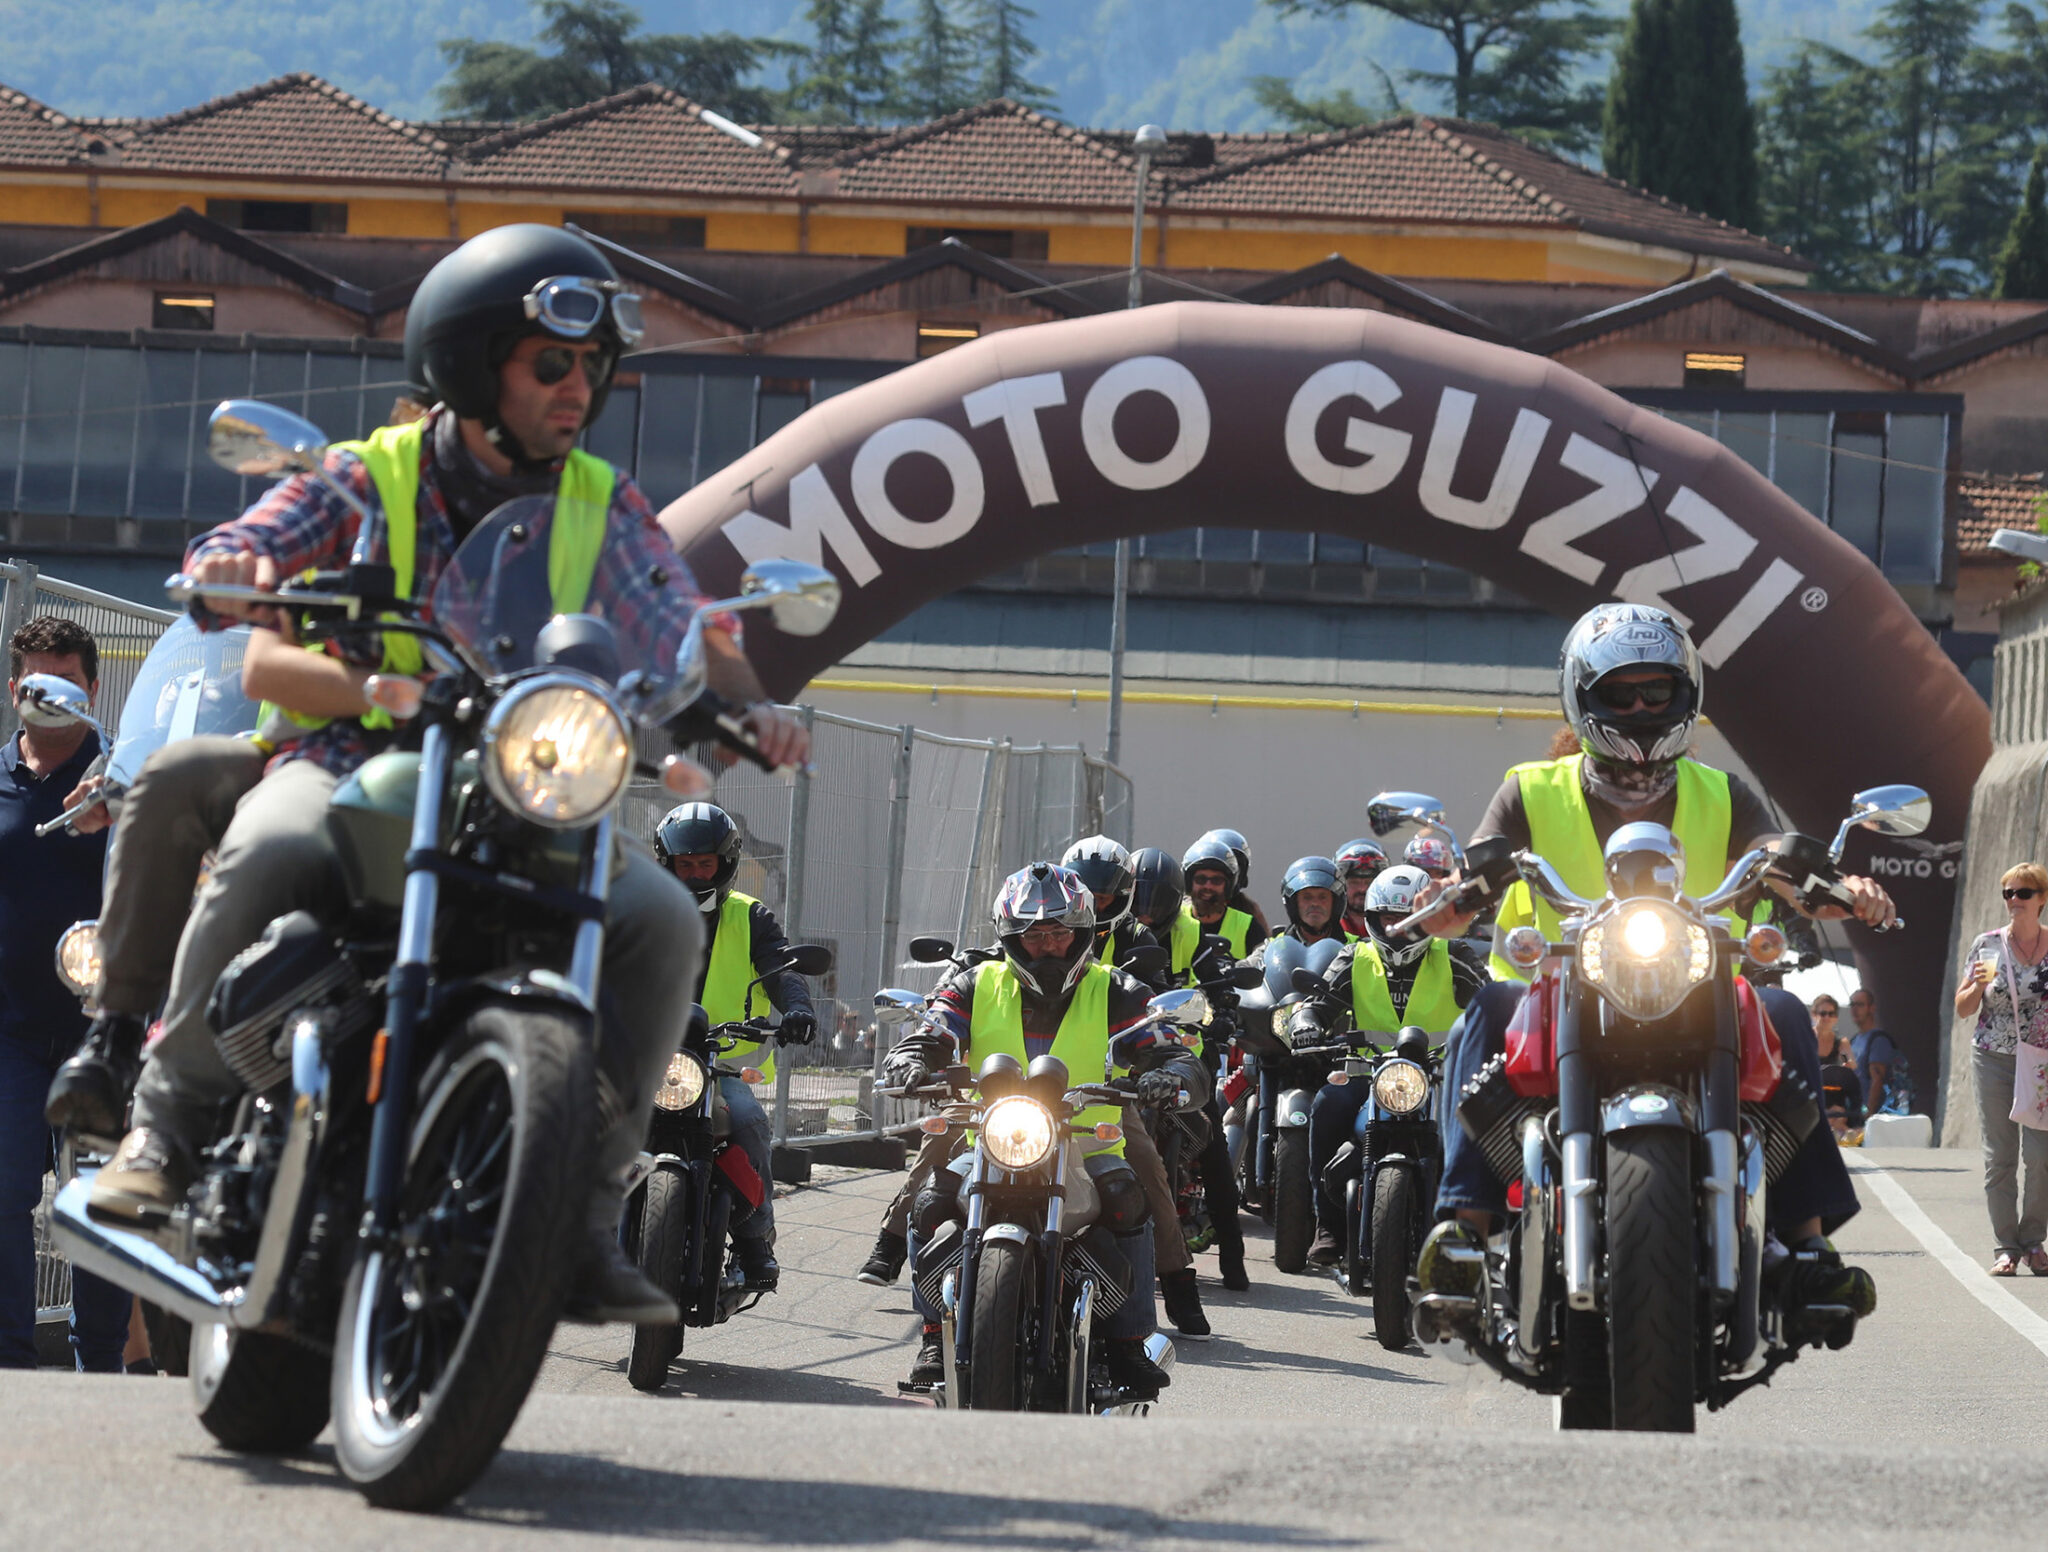 Moto Guzzi werelddagen van start!